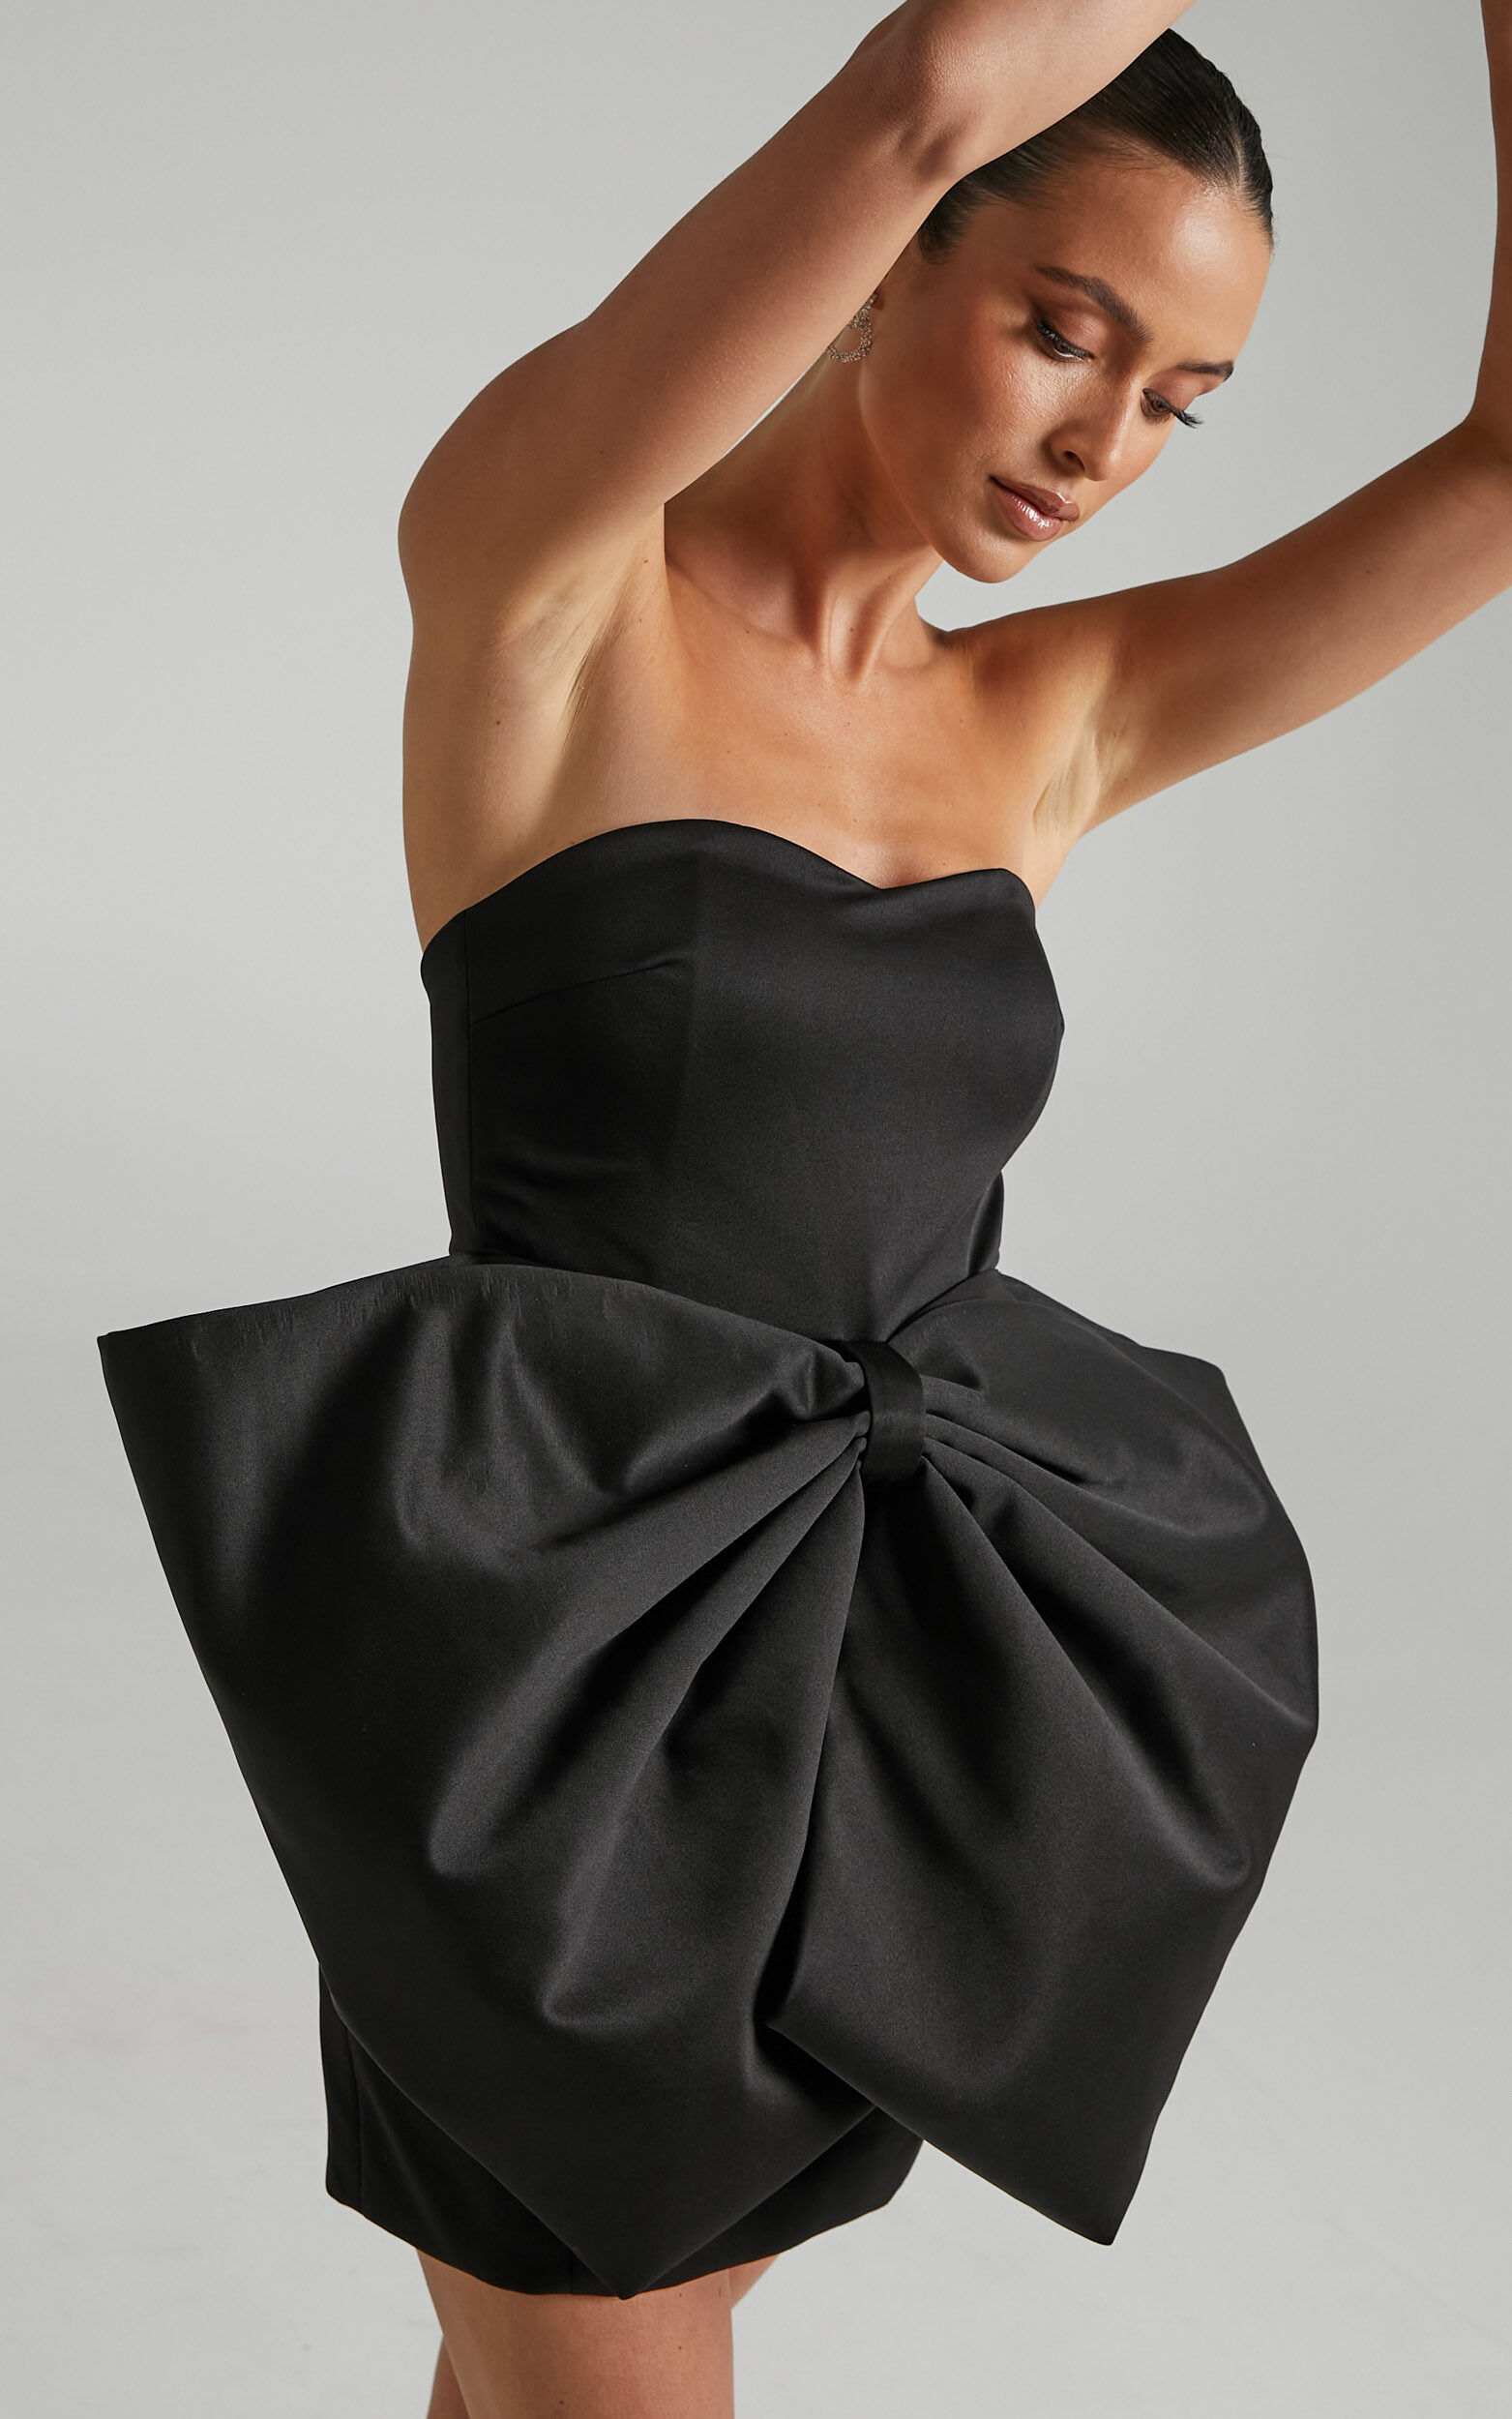 Charmilla Mini Dress - Strapless Bow Front Dress in Black